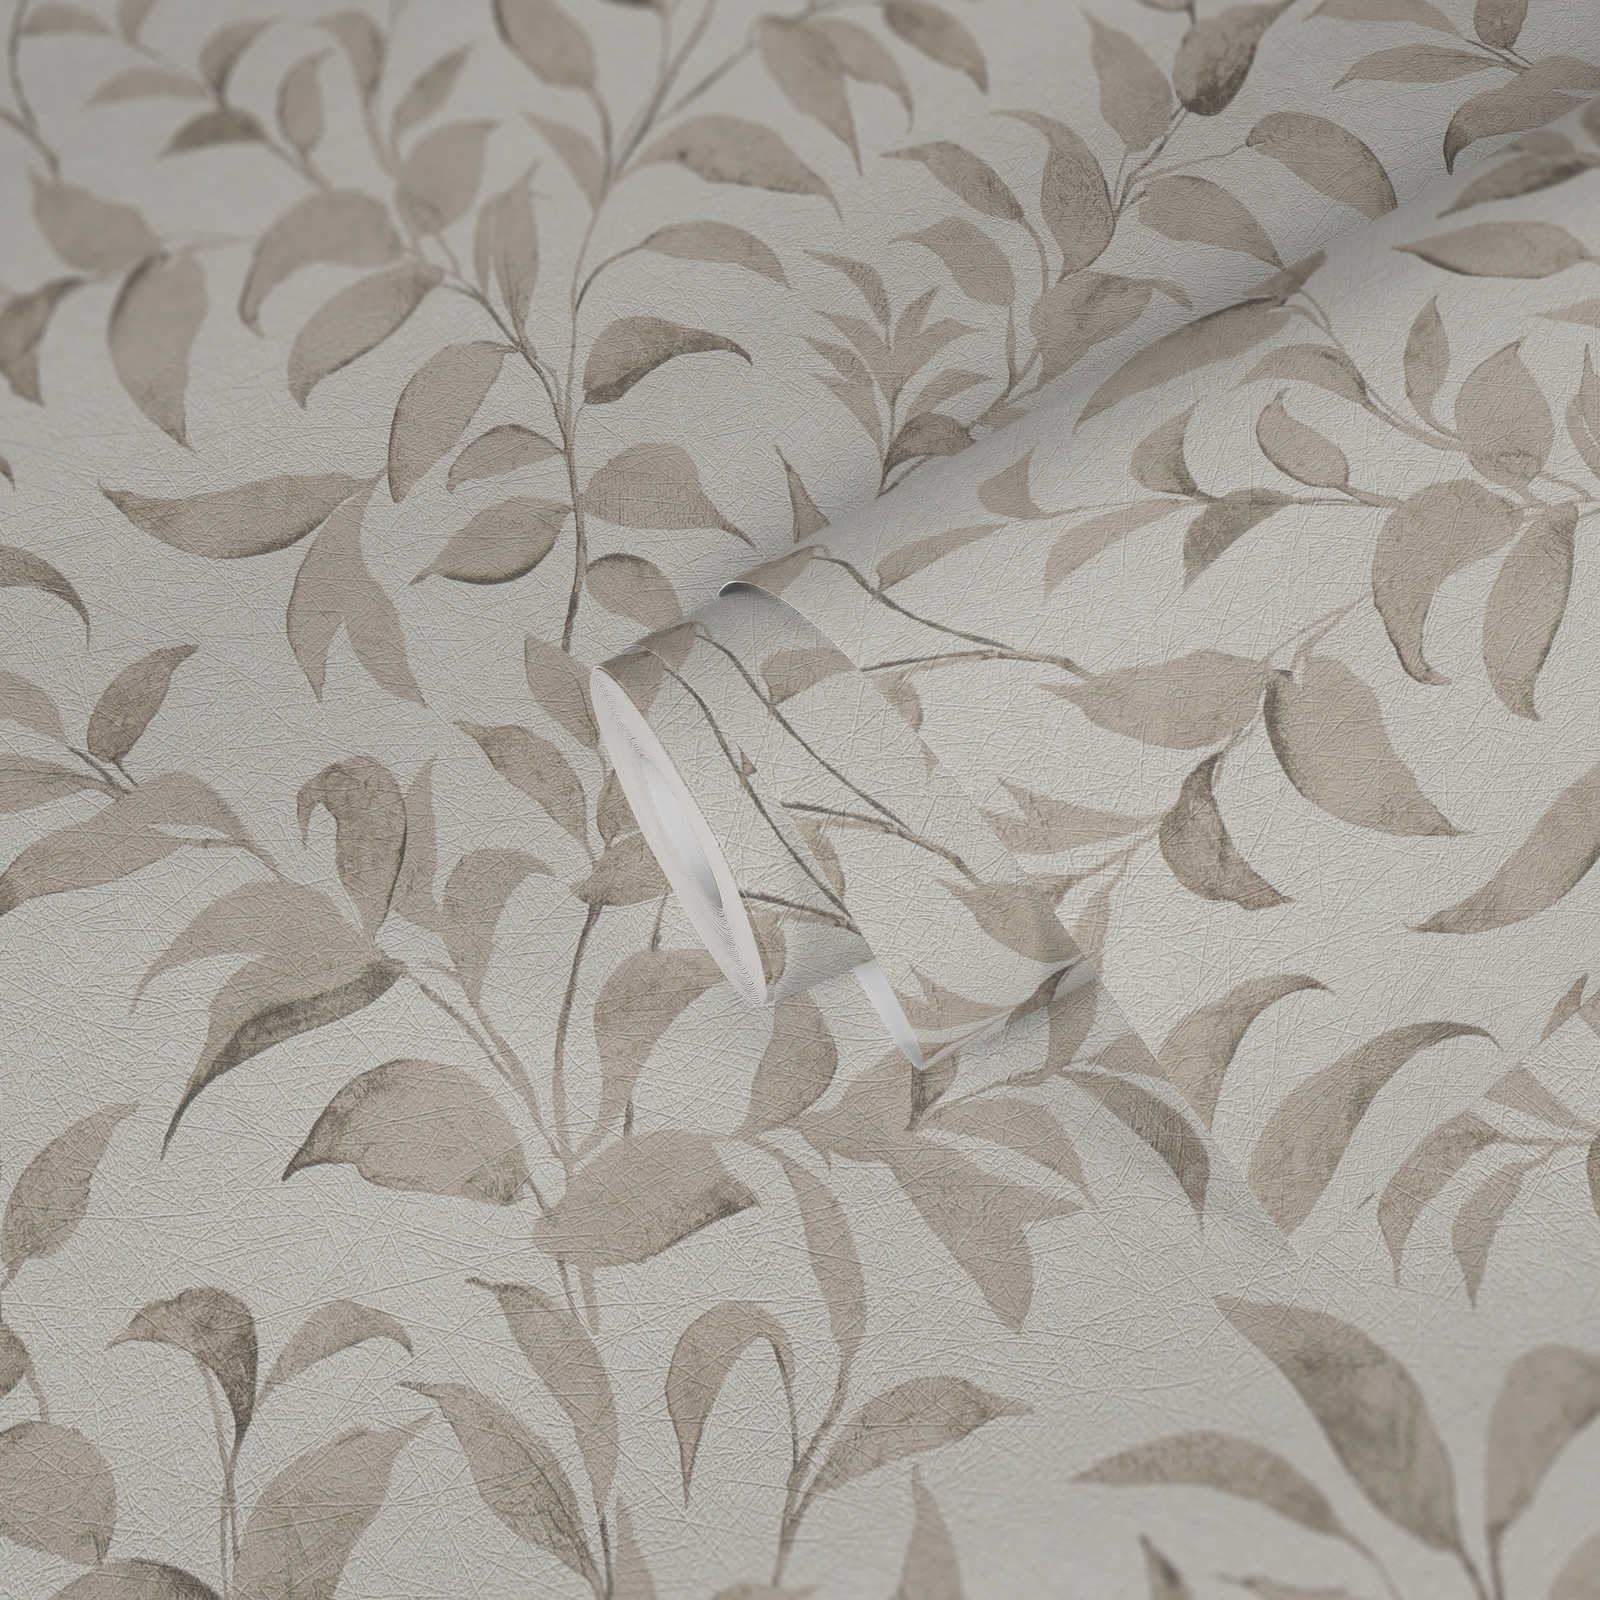             Floral leaves wallpaper textured shimmering - white, grey, beige
        